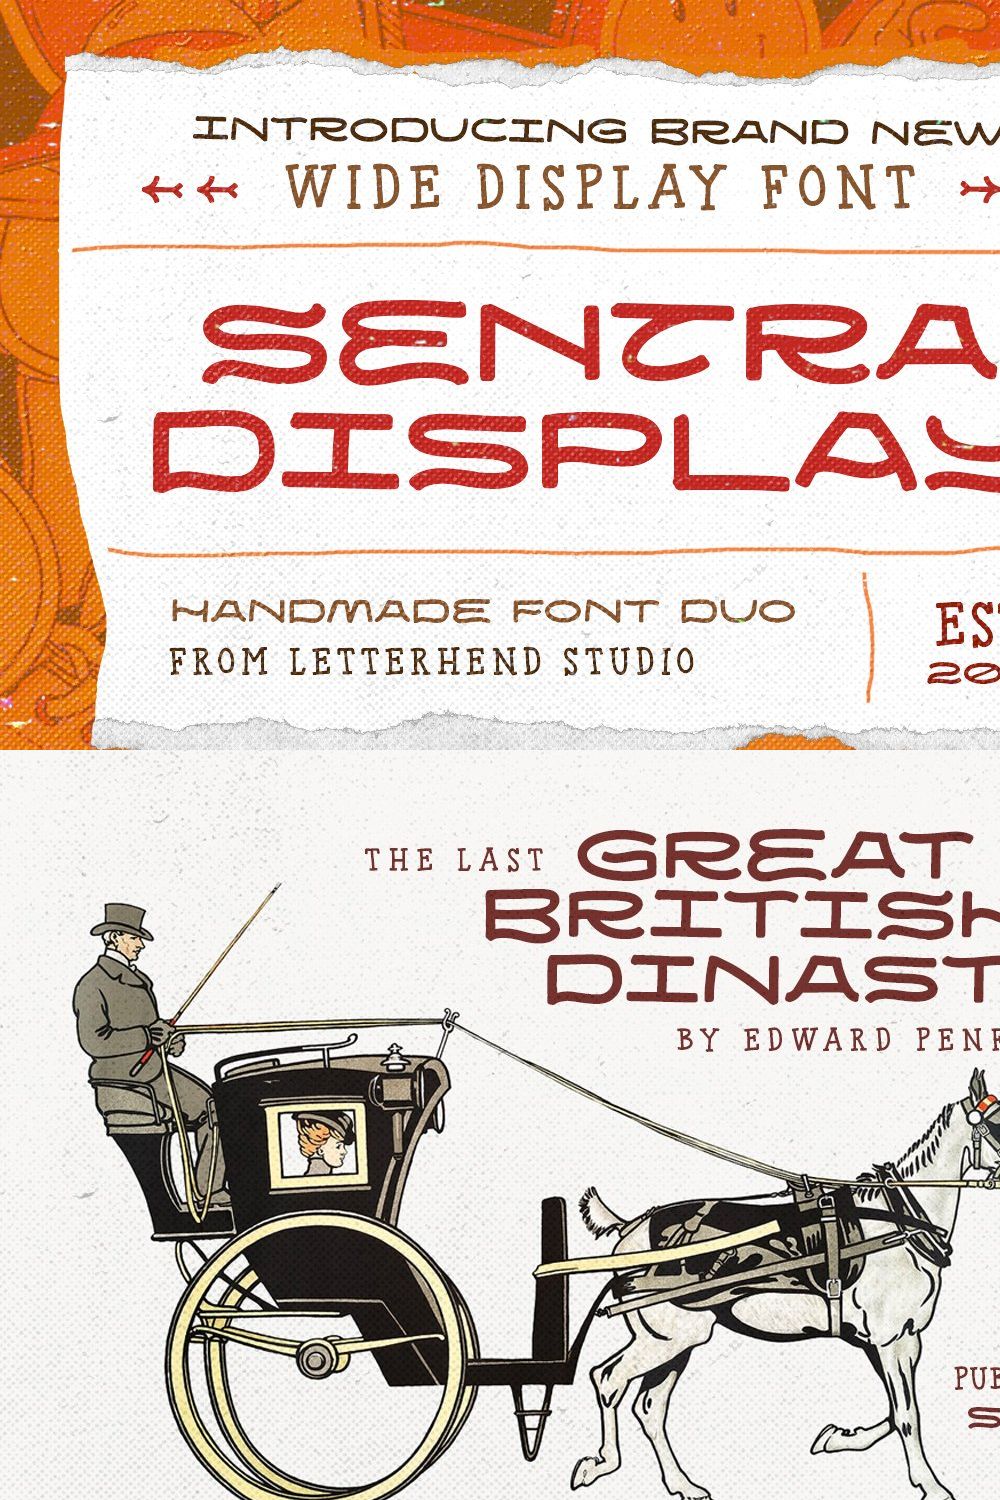 Sentra Display - Handmade Font Duo pinterest preview image.